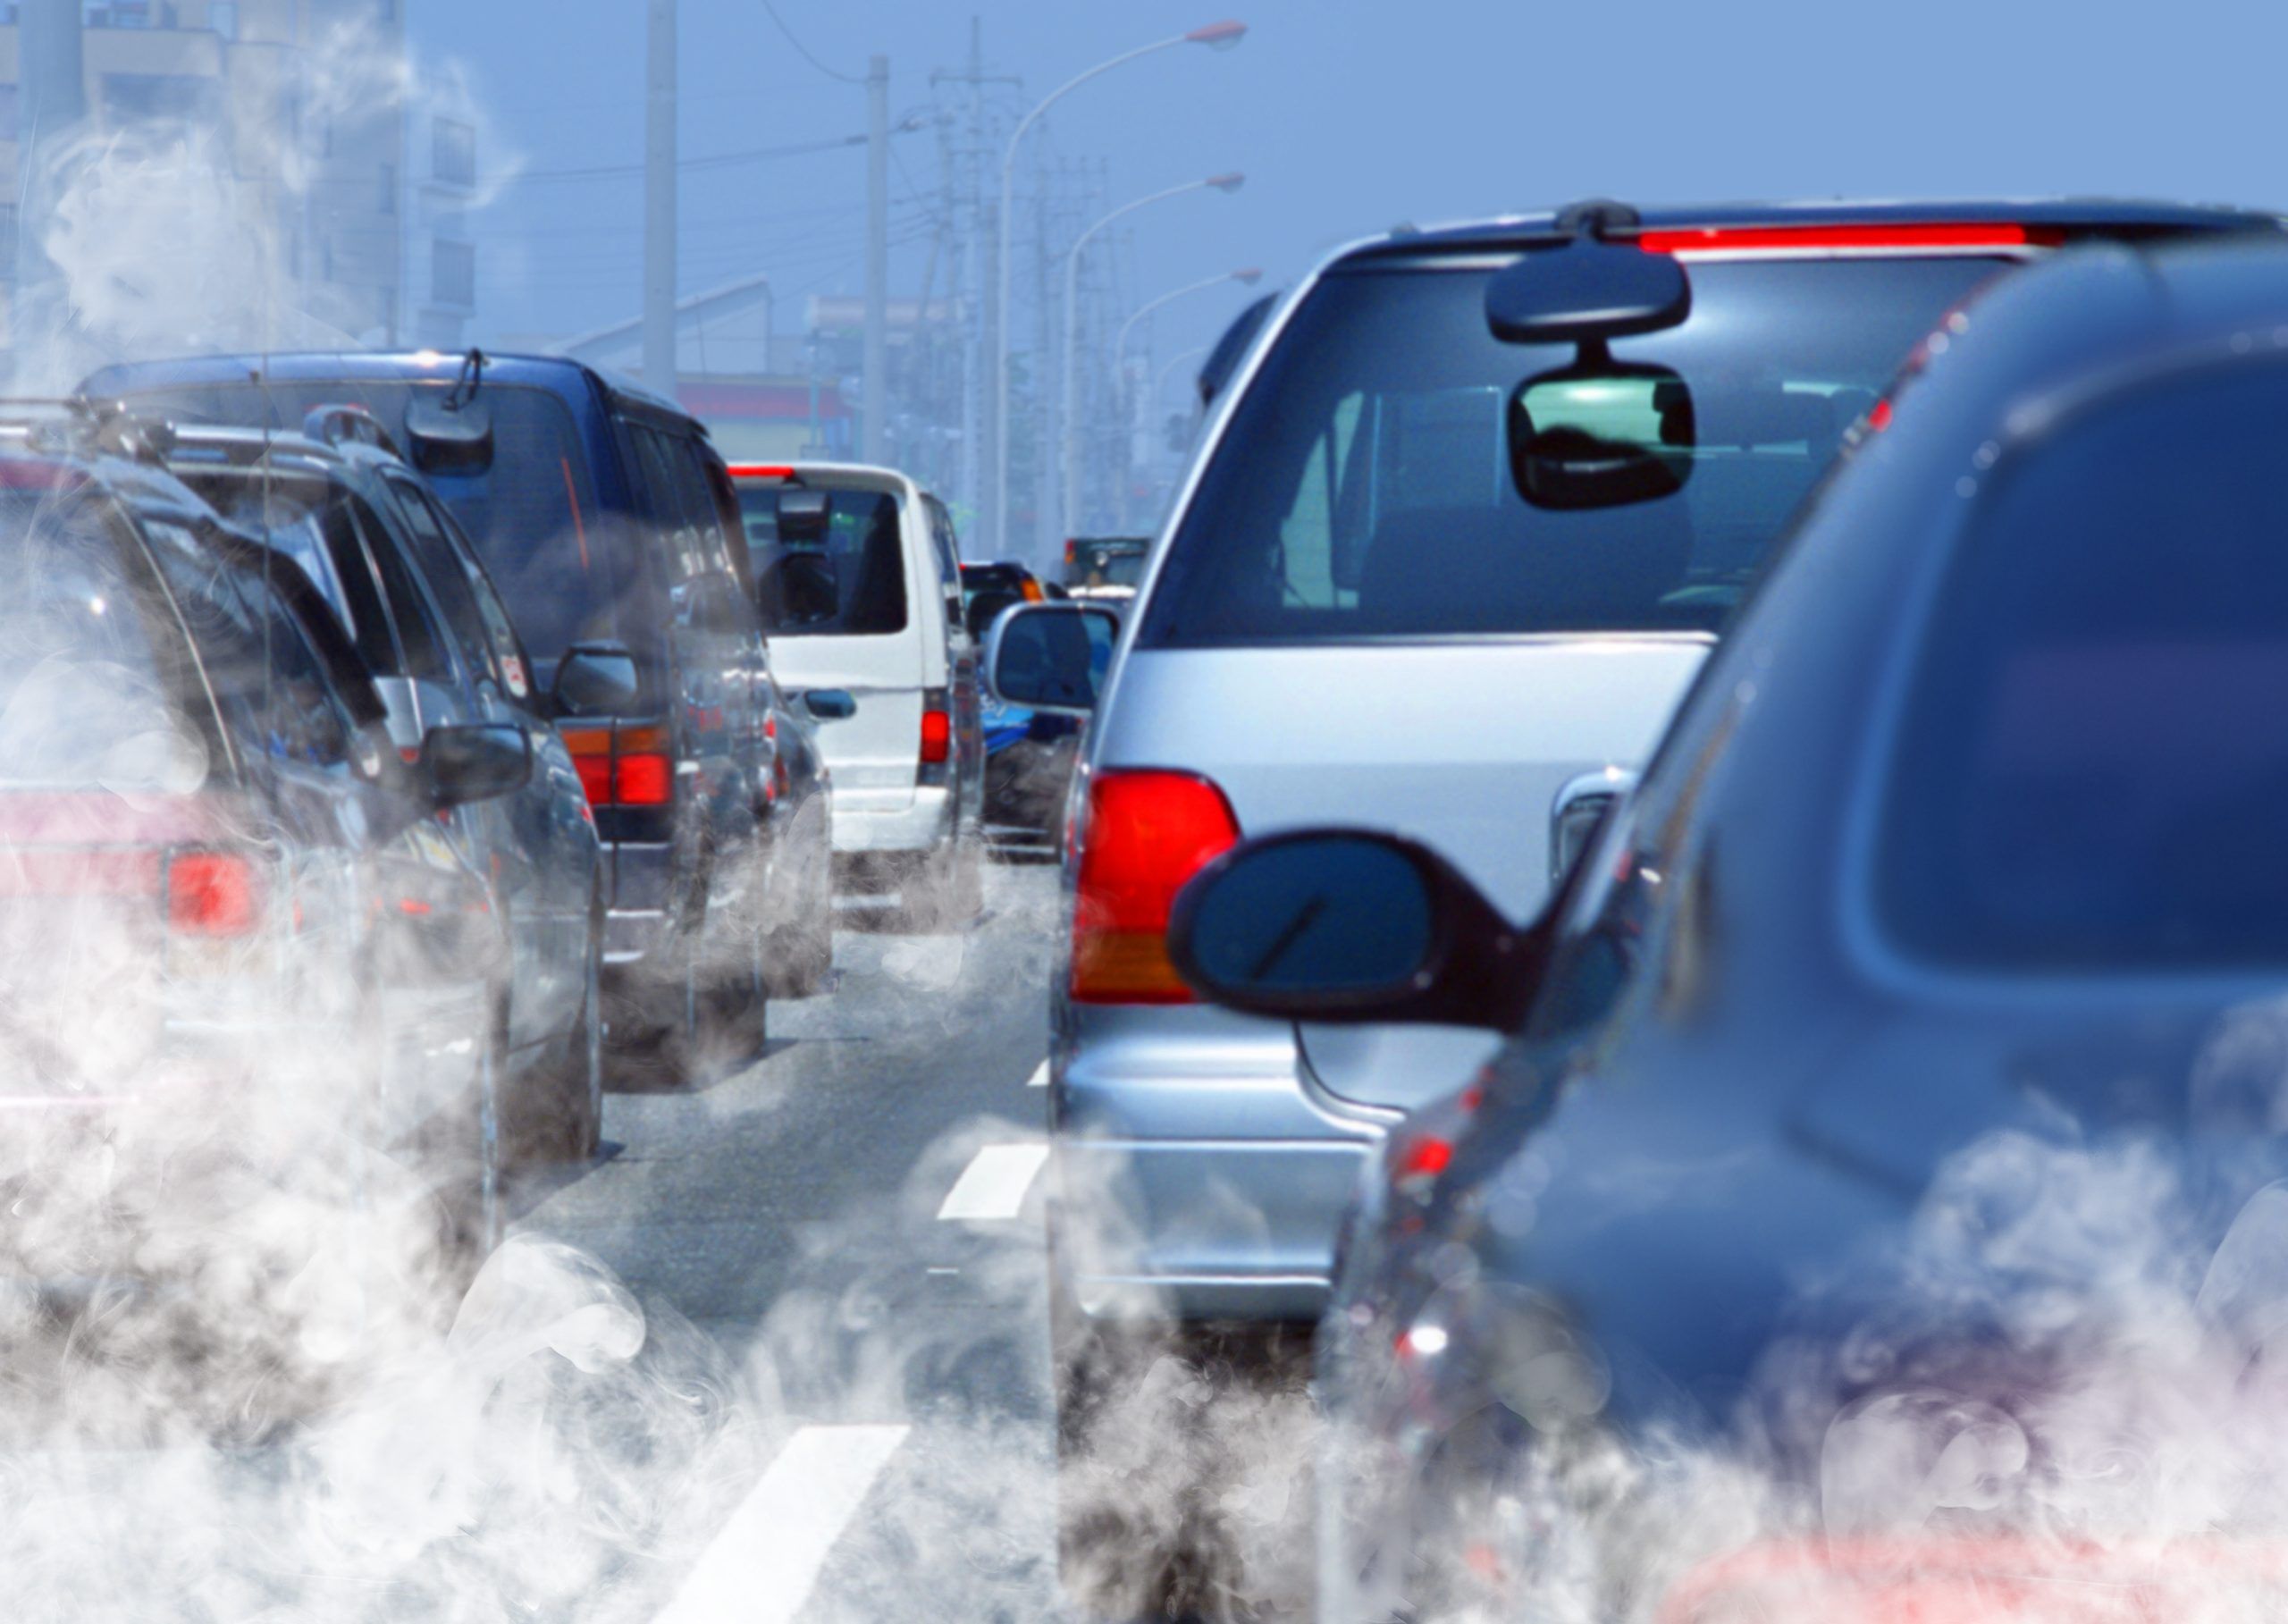 Air Pollution A Major Risk Factor For Premature Death